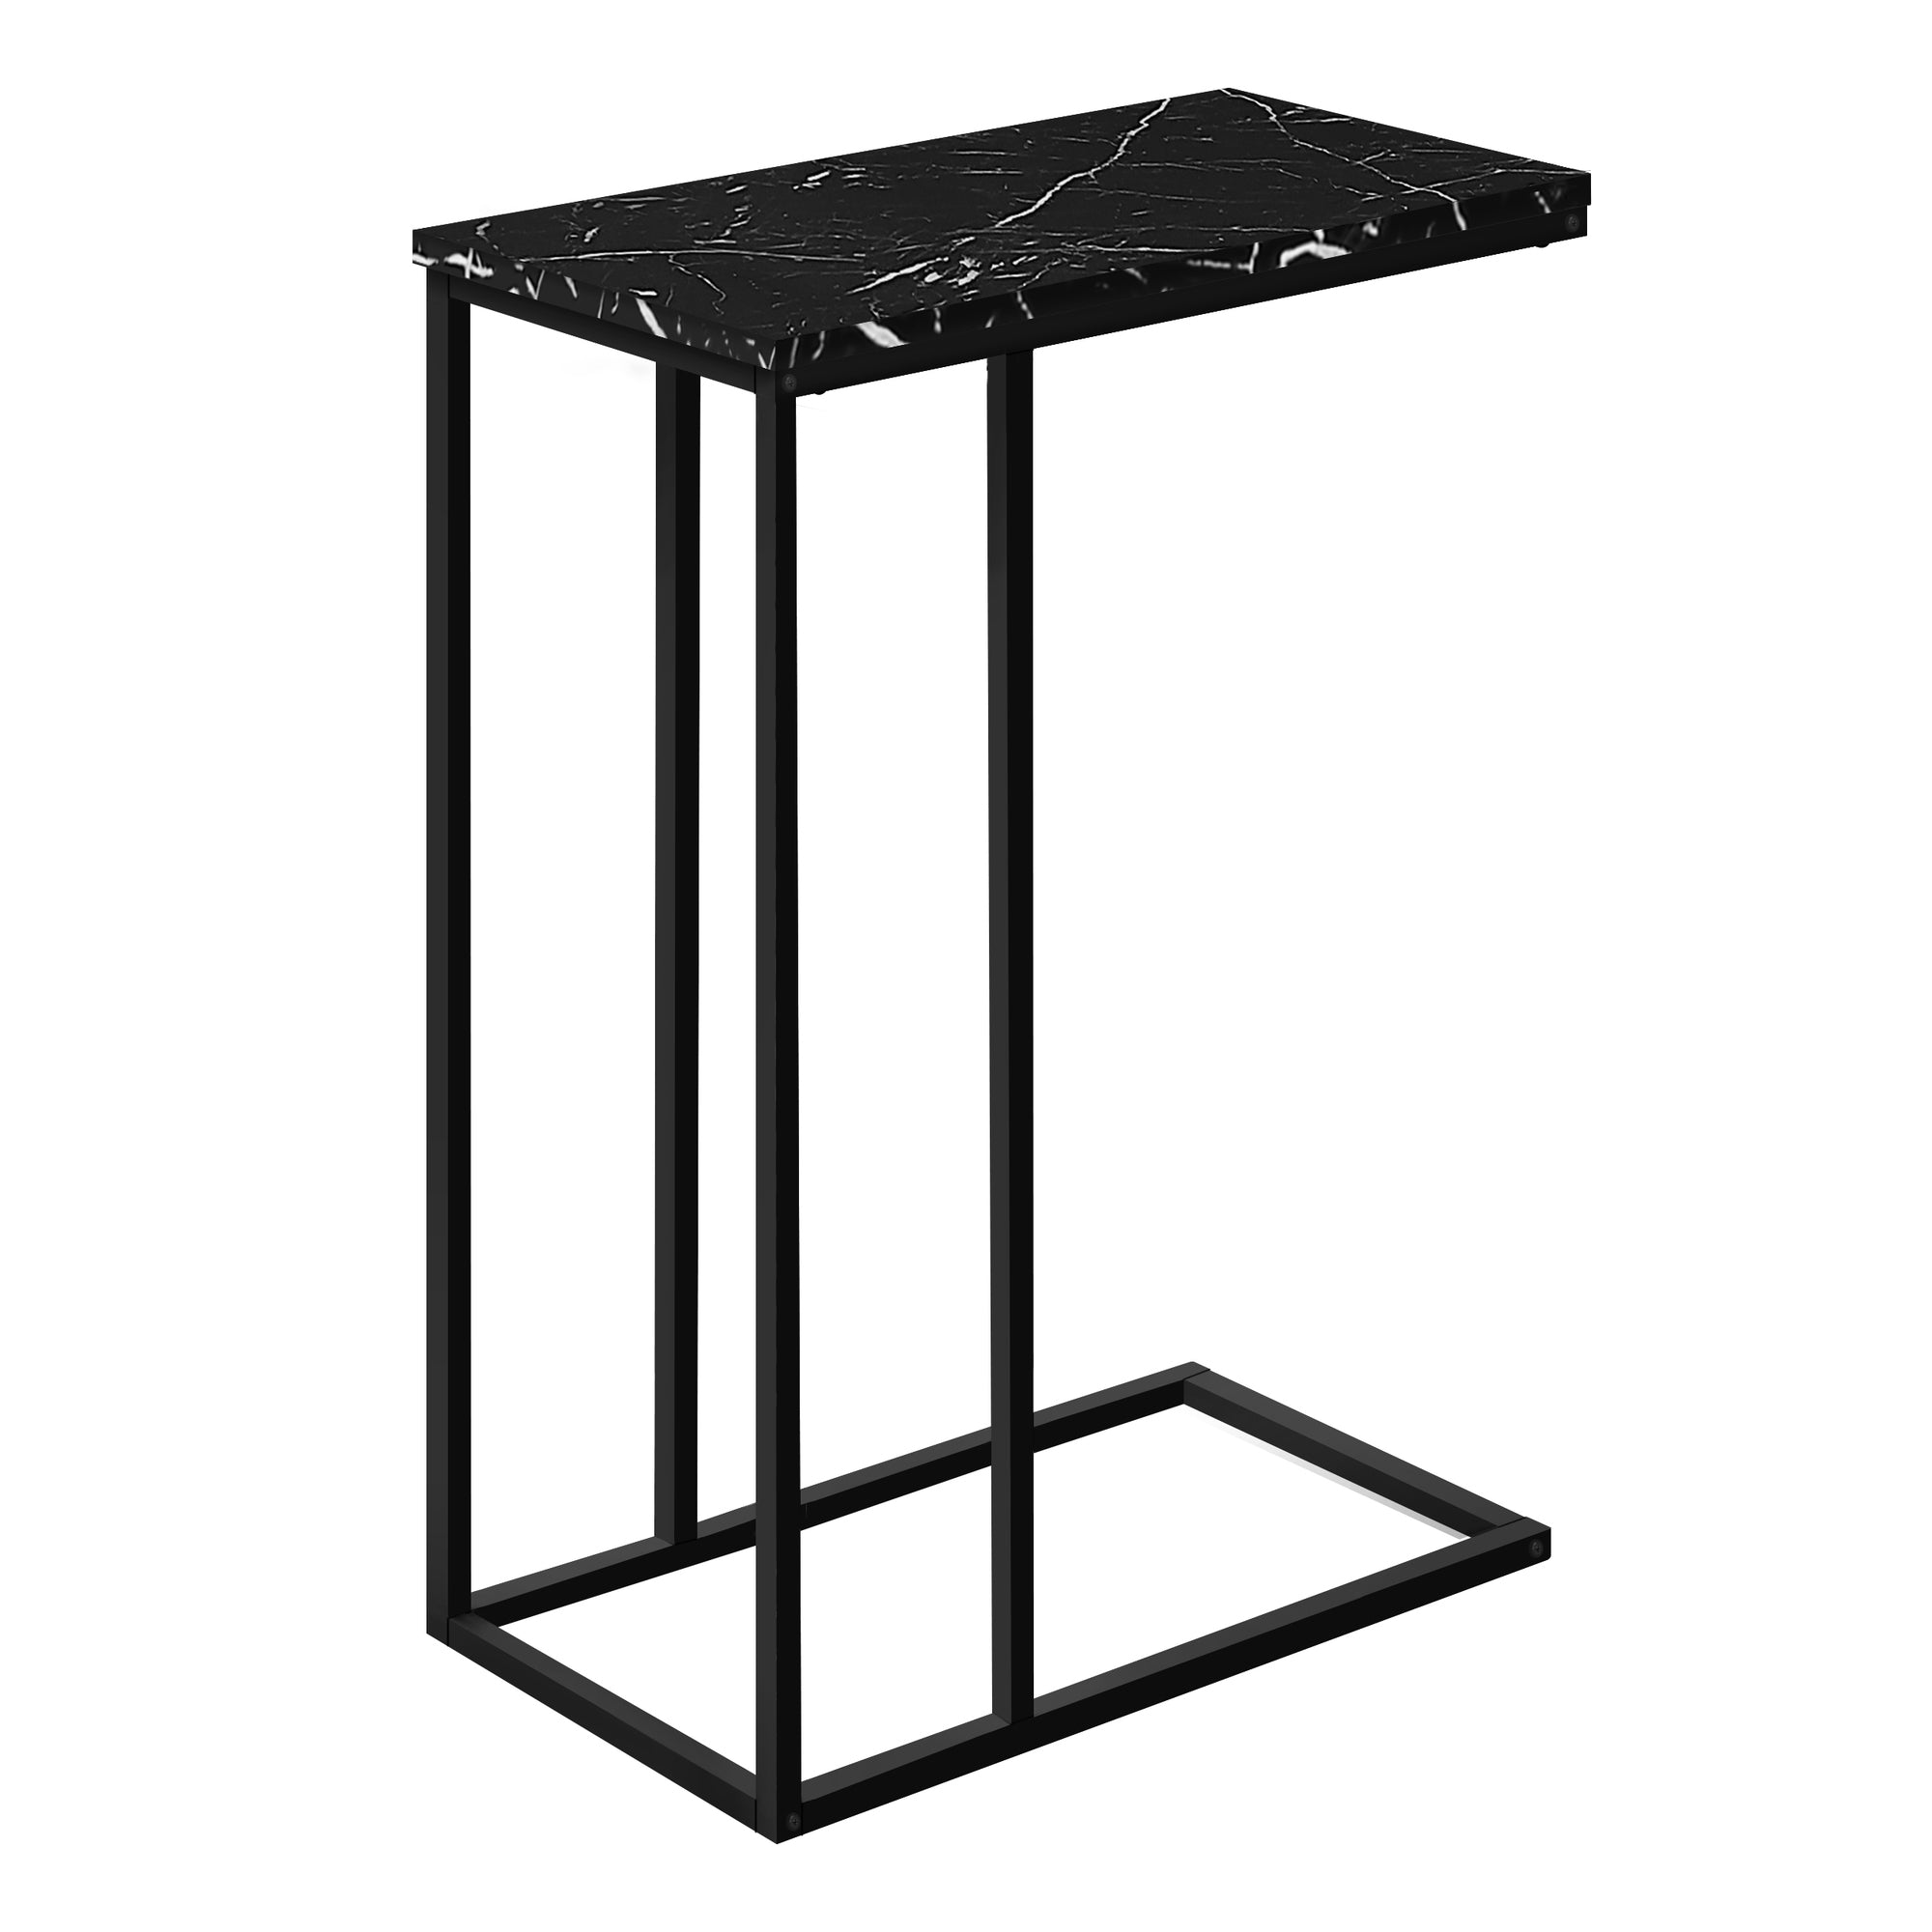 MN-433763    Side Table, C Table - Rectangular, Metal Frame - Black Marble-Look